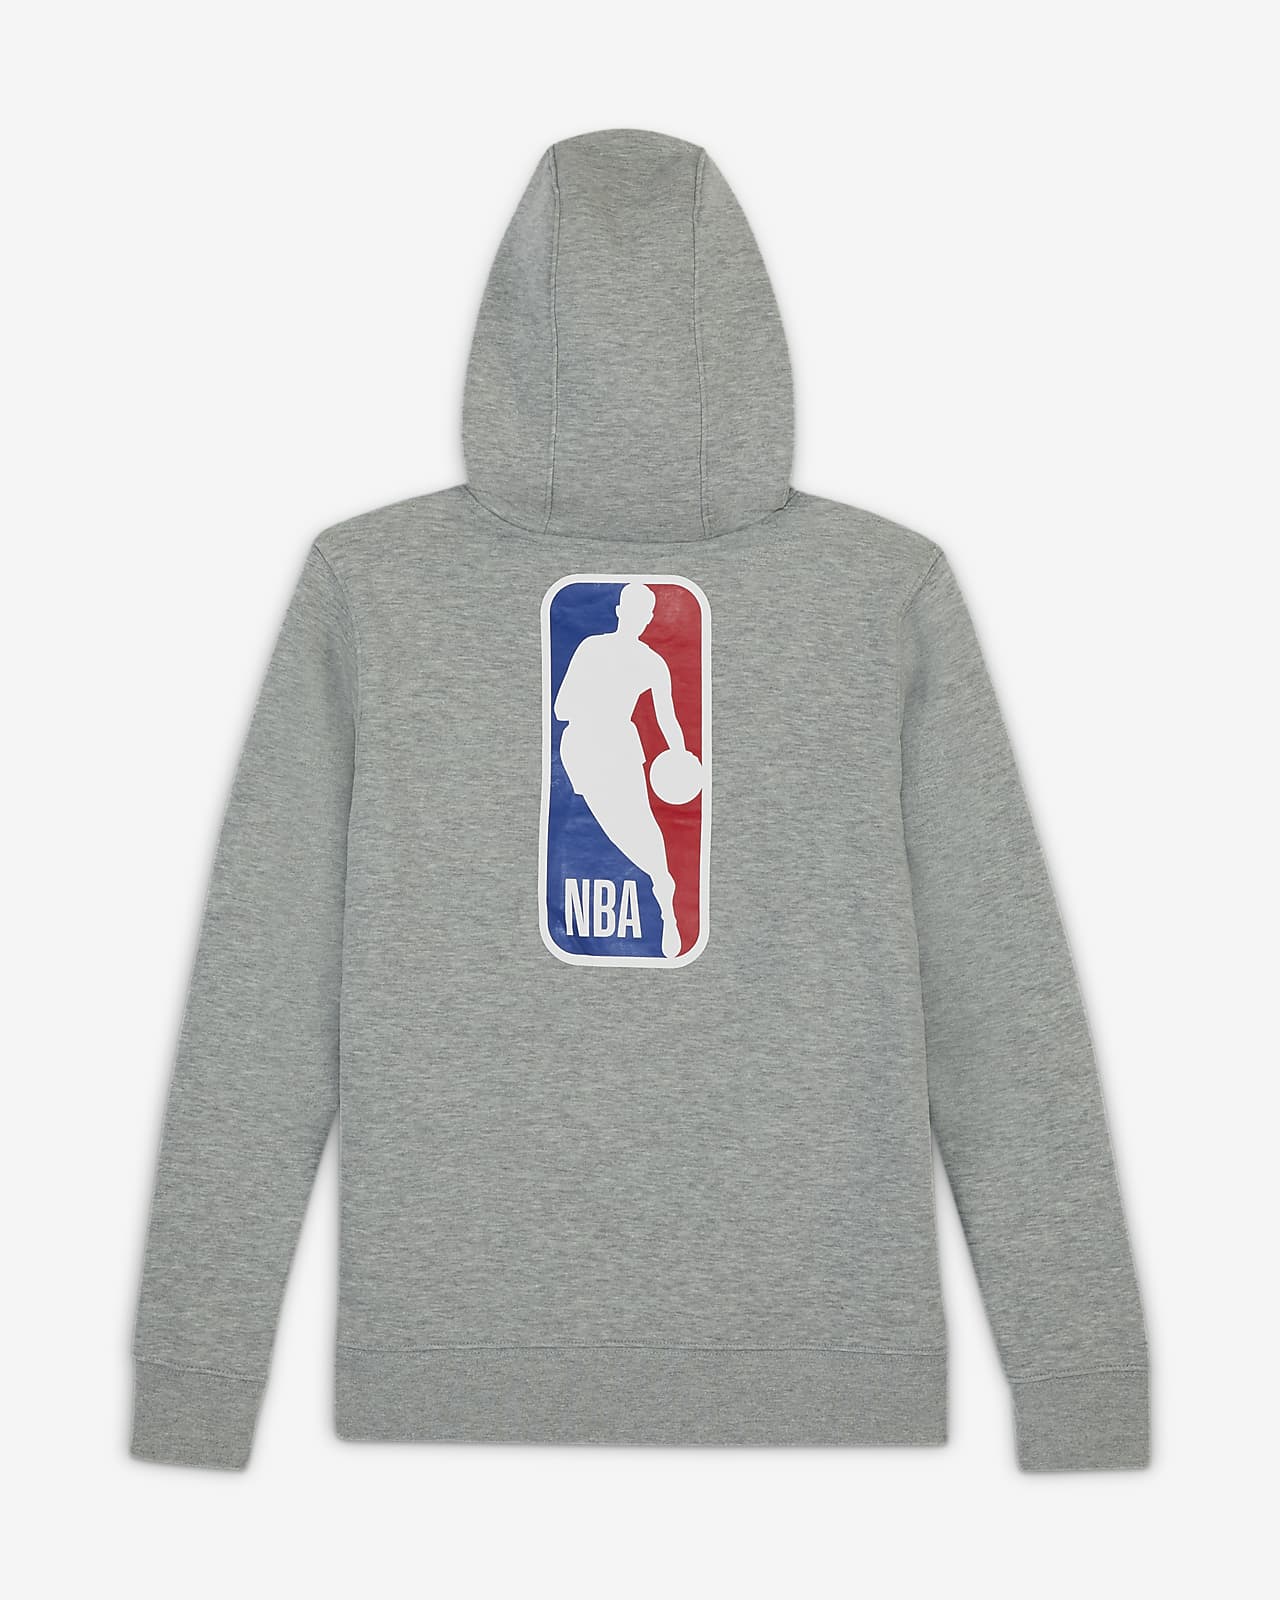 nba logo hoodie grey